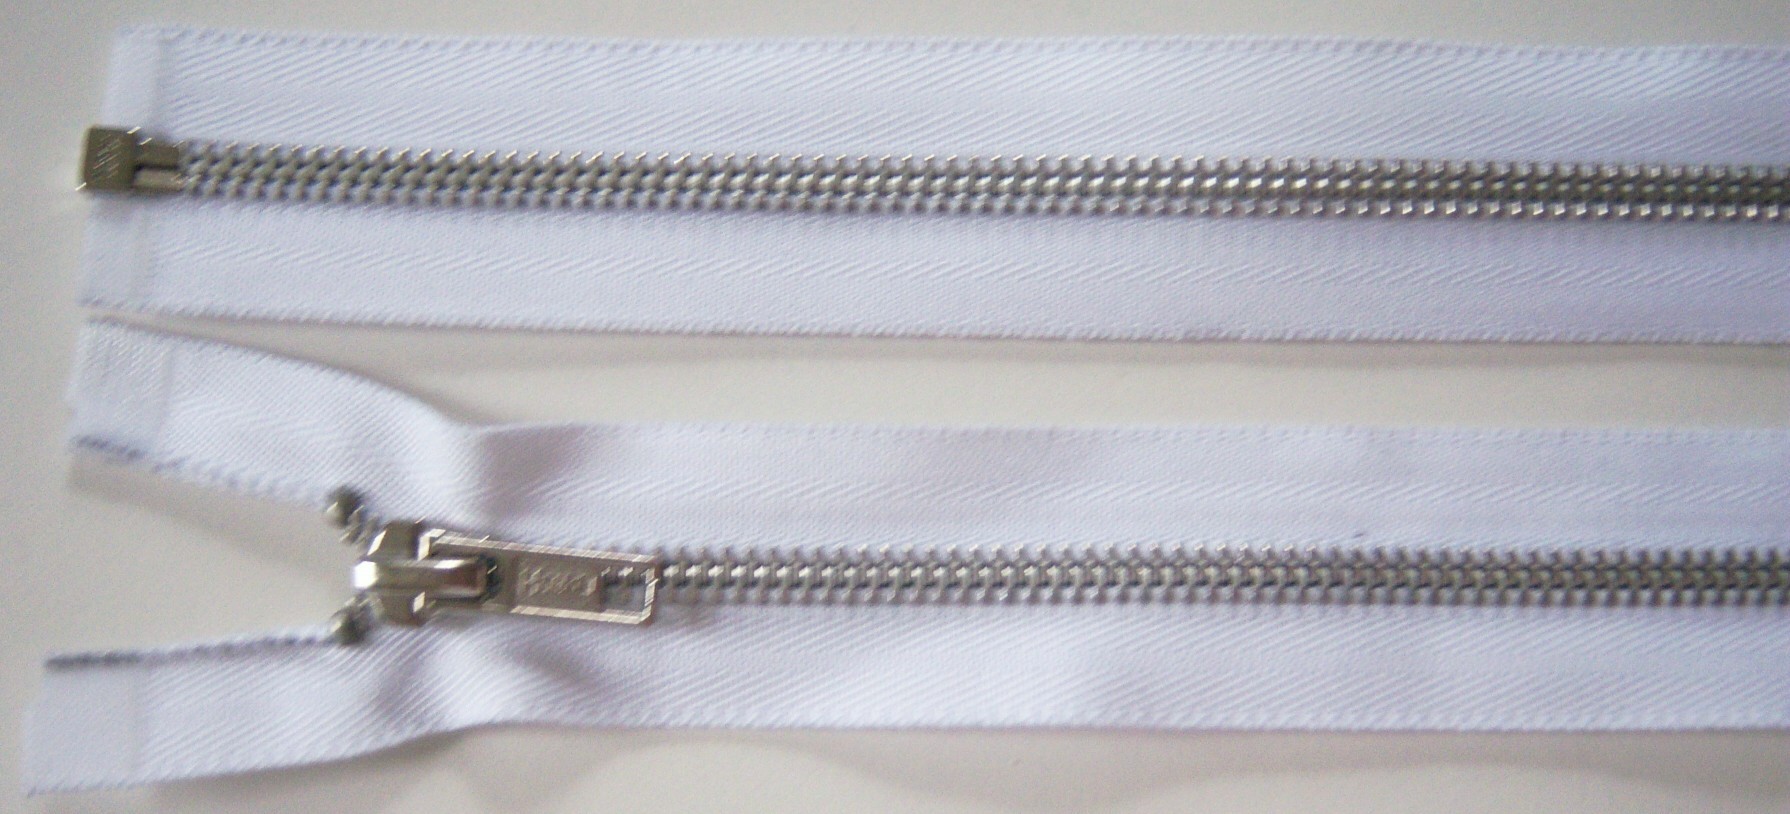 White Ideal 29.5" Metal Separating Zipper